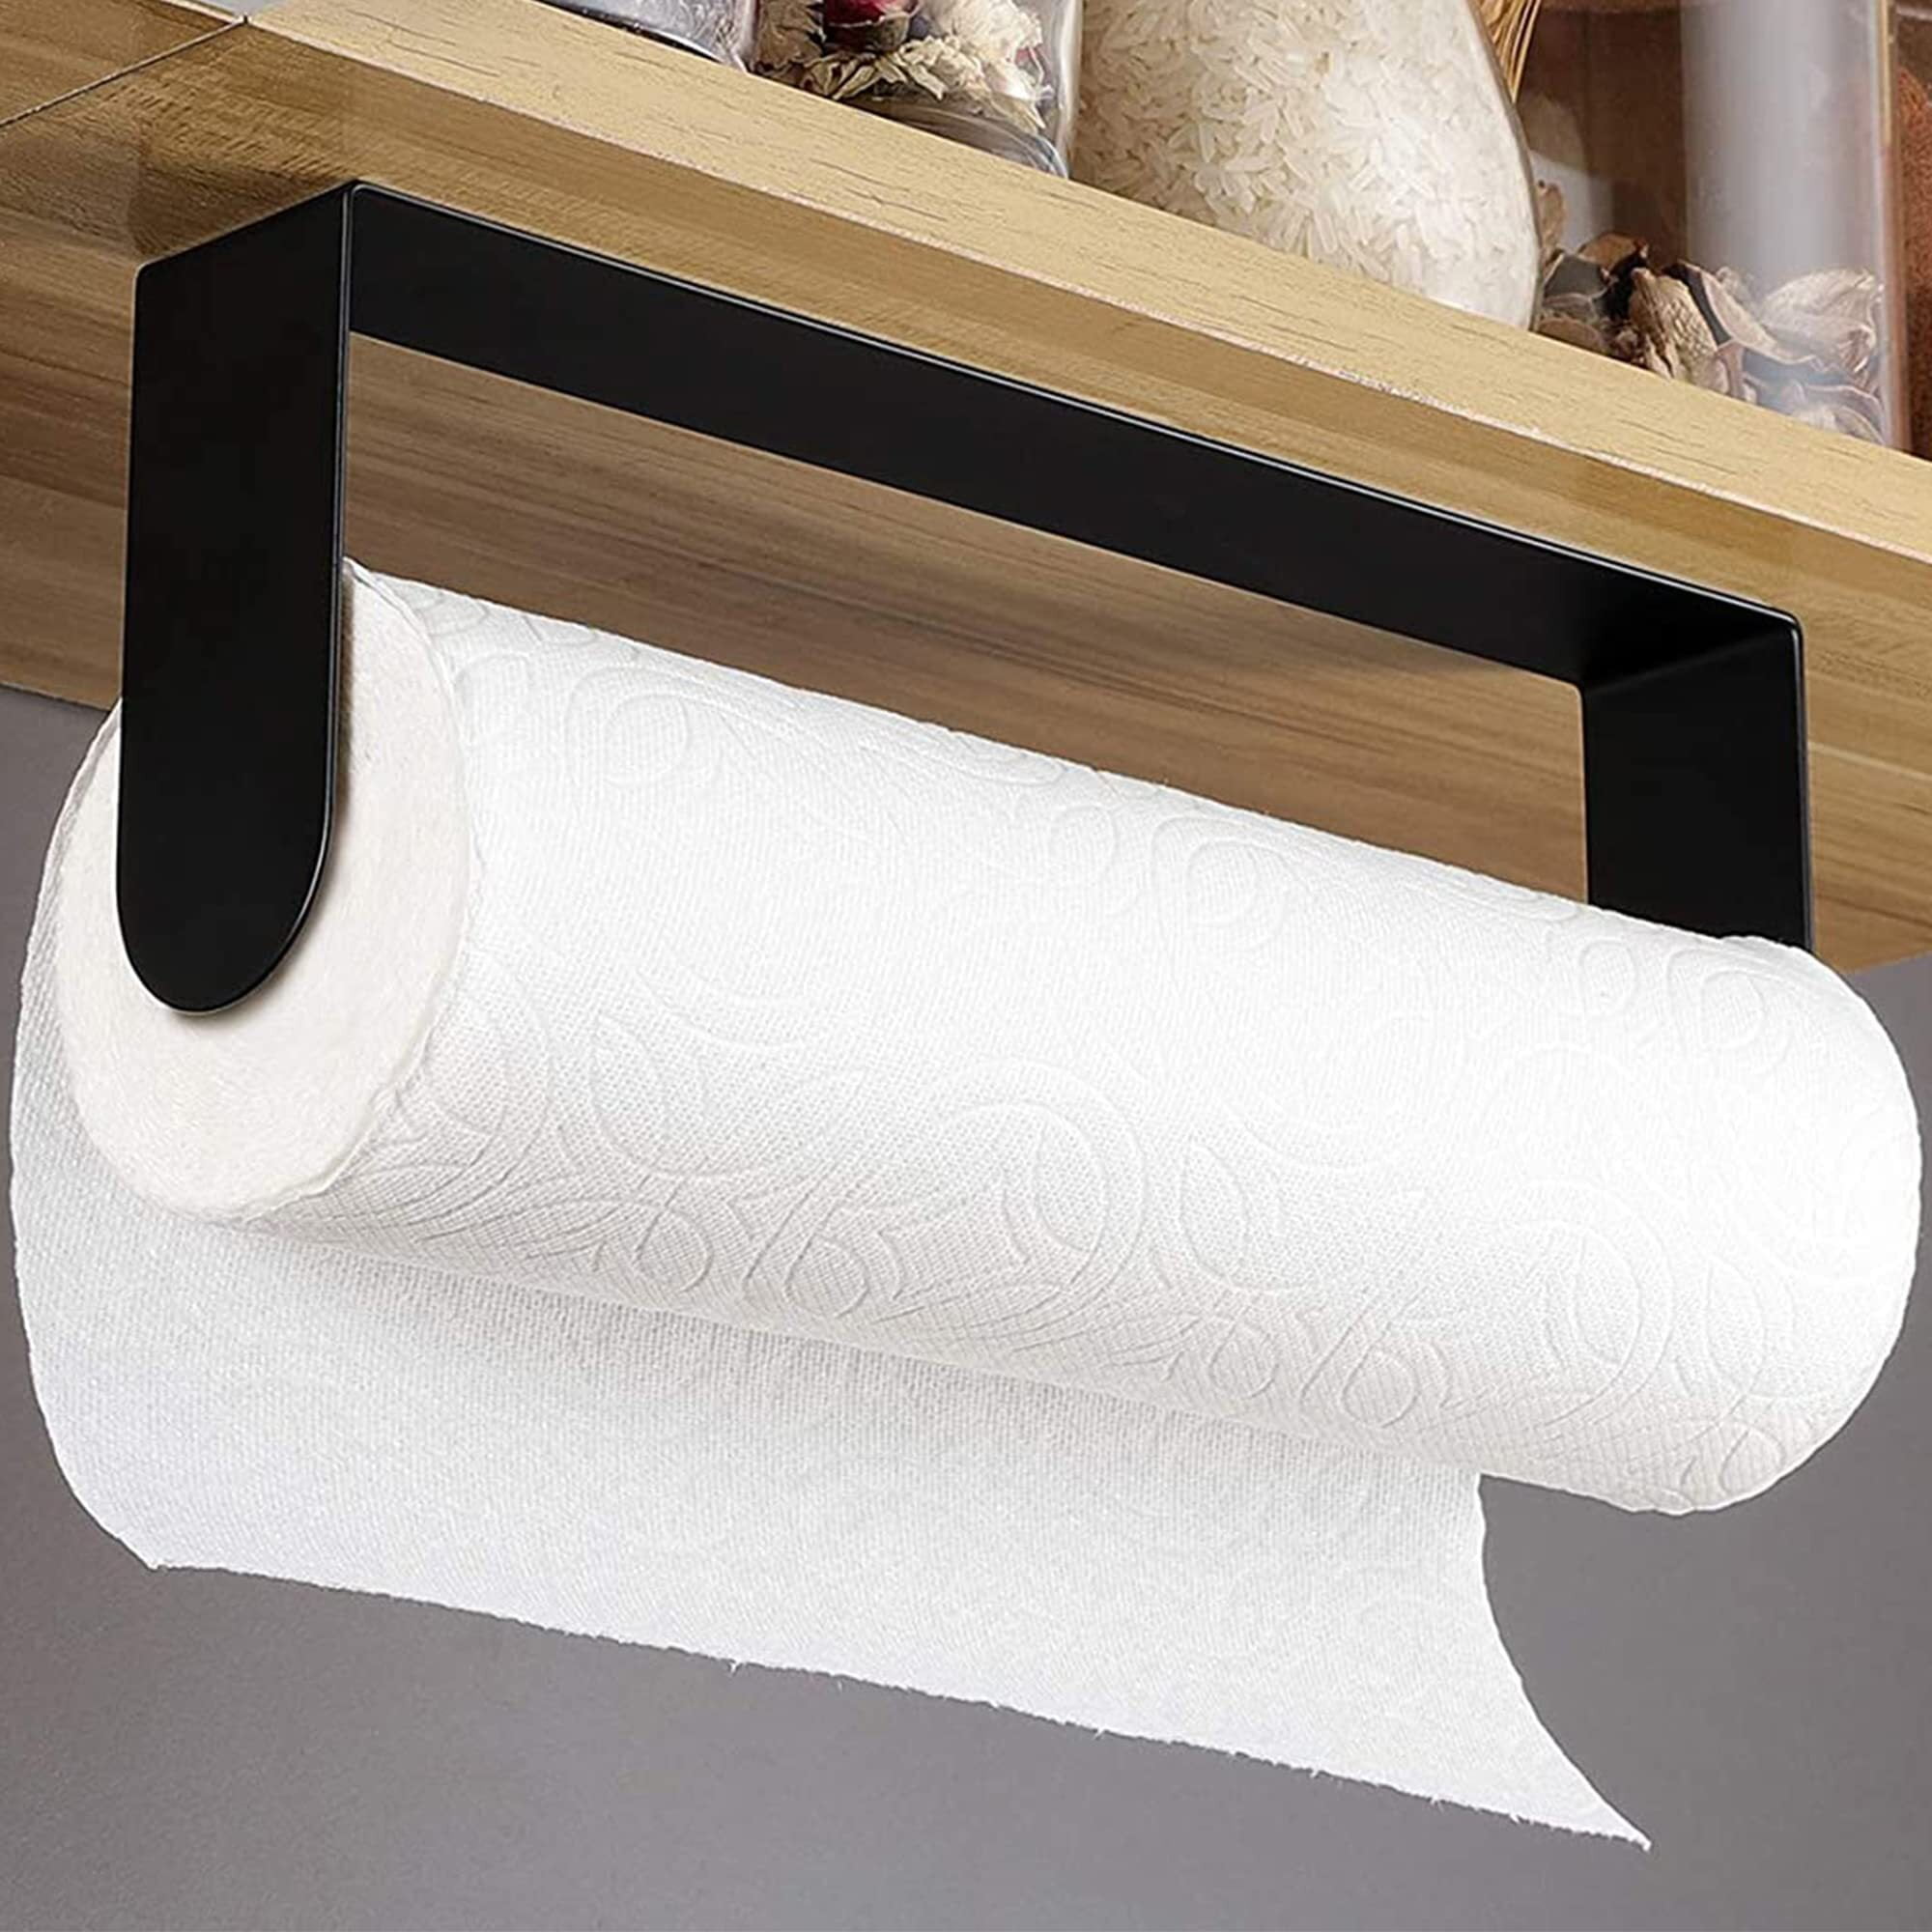 YIGII Kitchen Towel Holder Adhesive KS005F